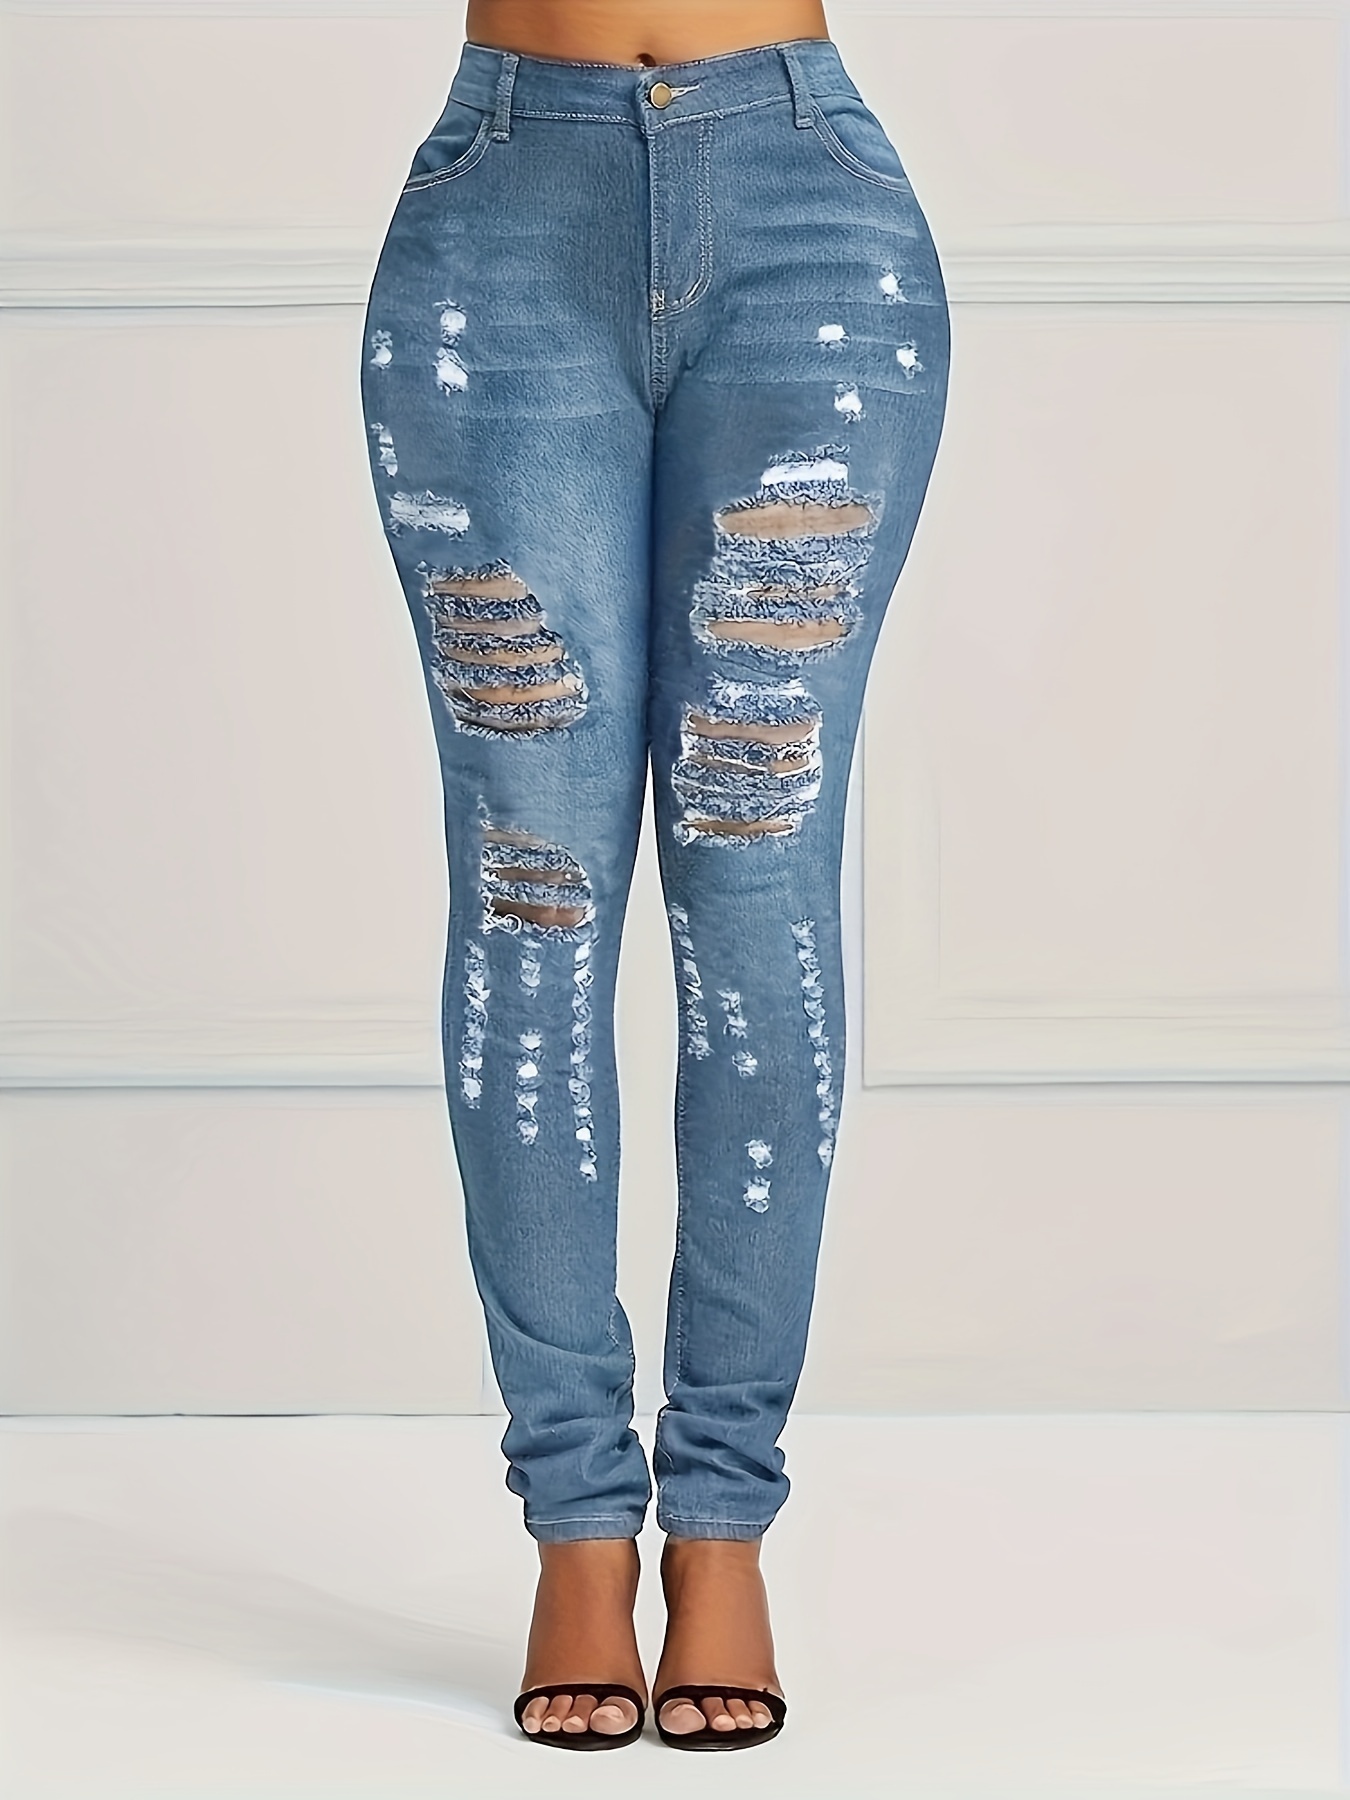 blue ripped holes skinny jeans distressed high waist slim fit slash pockets denim pants womens denim jeans clothing